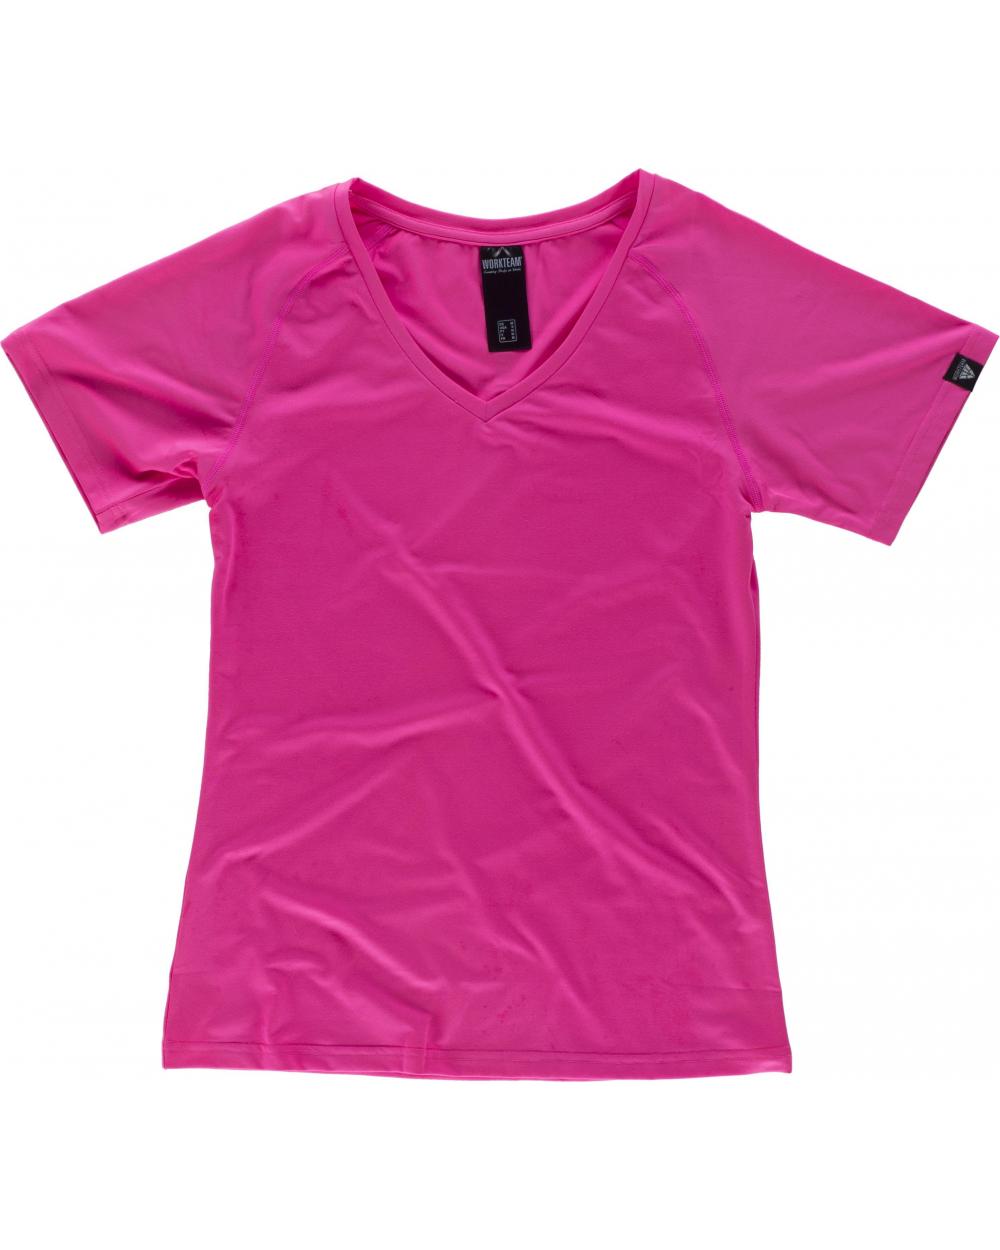 Comprar Camiseta deportiva para mujer S7525 Rosa Fluor workteam delante